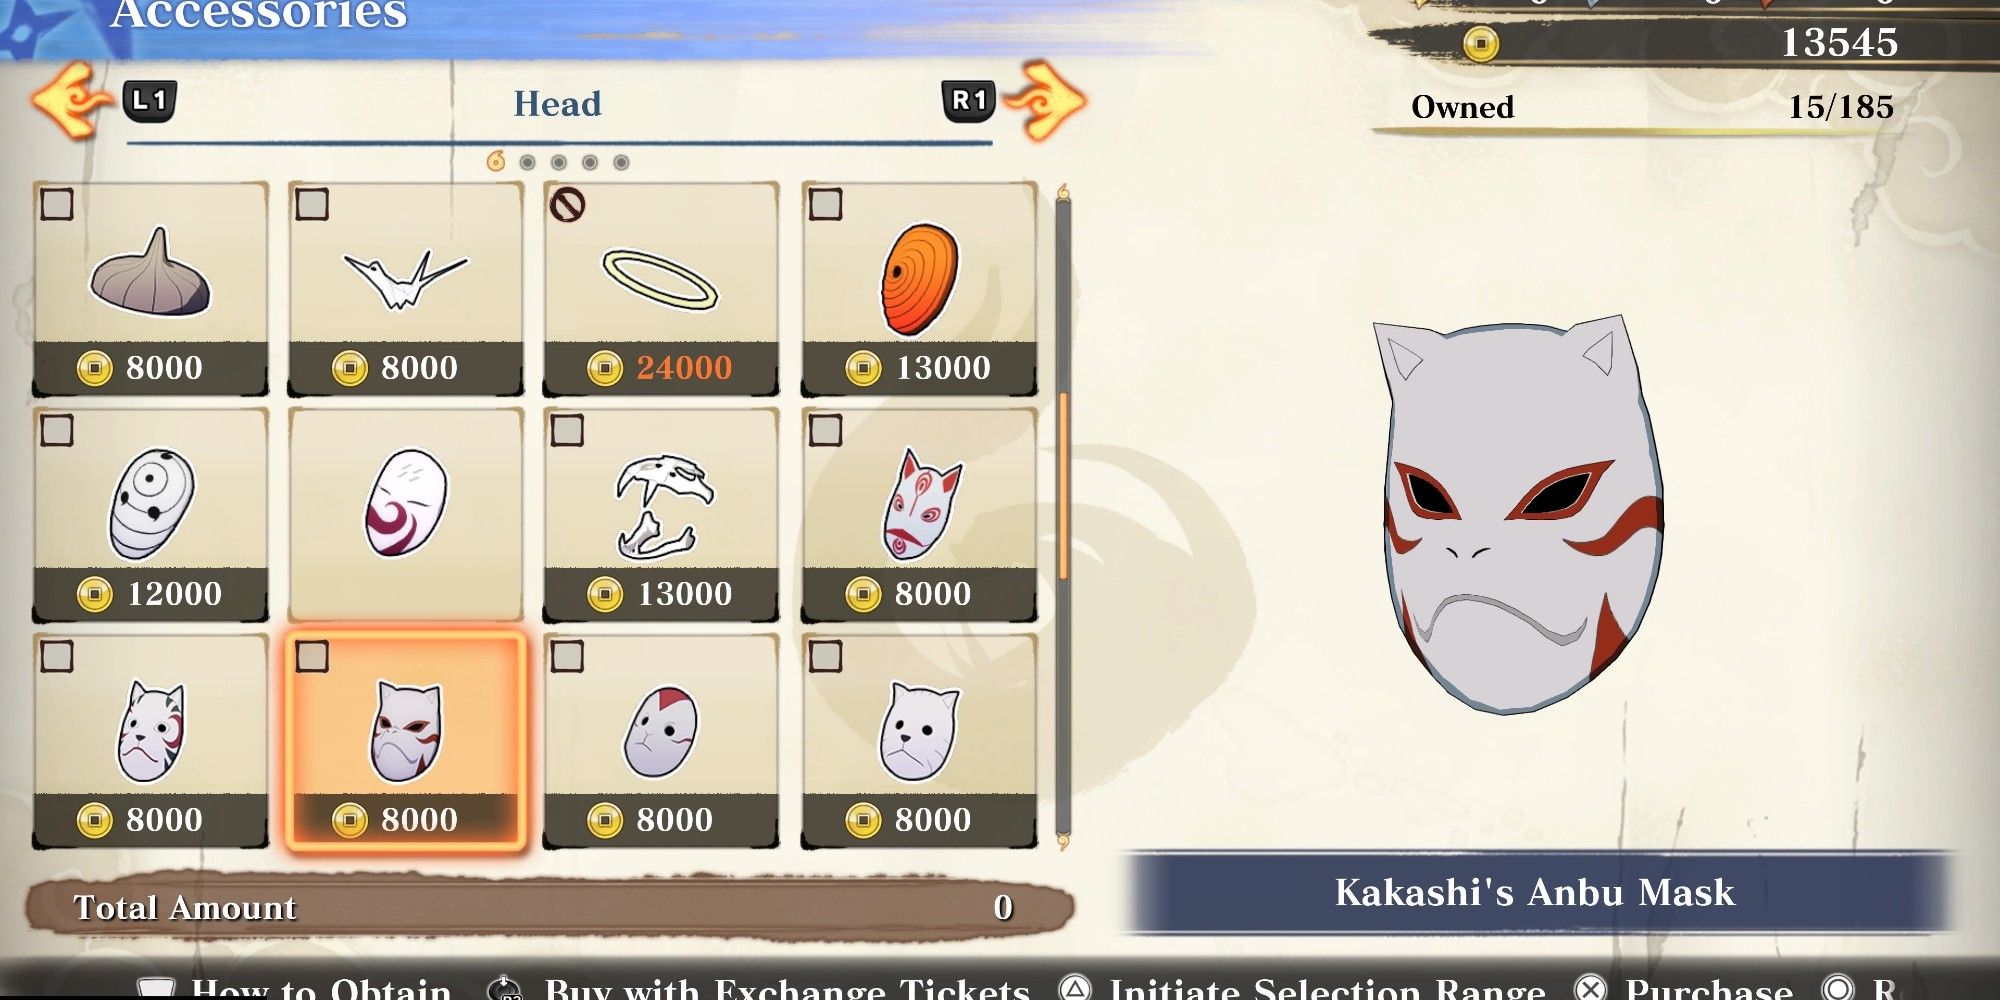 Kakashi's Anbu Mask